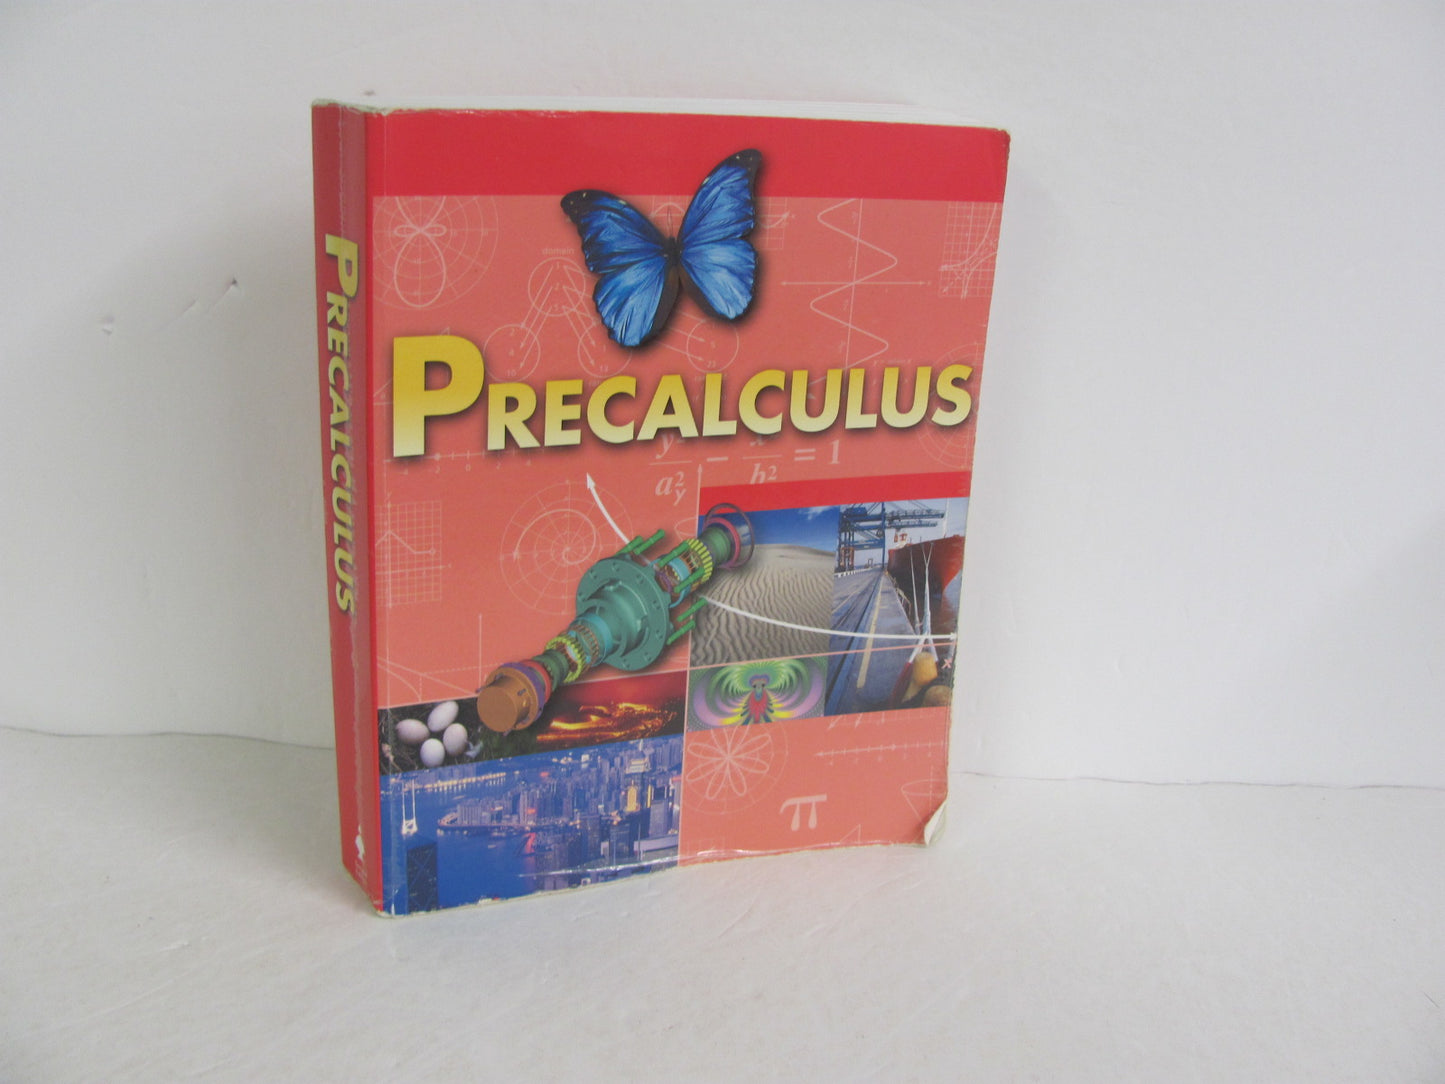 PreCalculus BJU Press Student Book Pre-Owned High School Mathematics Textbooks